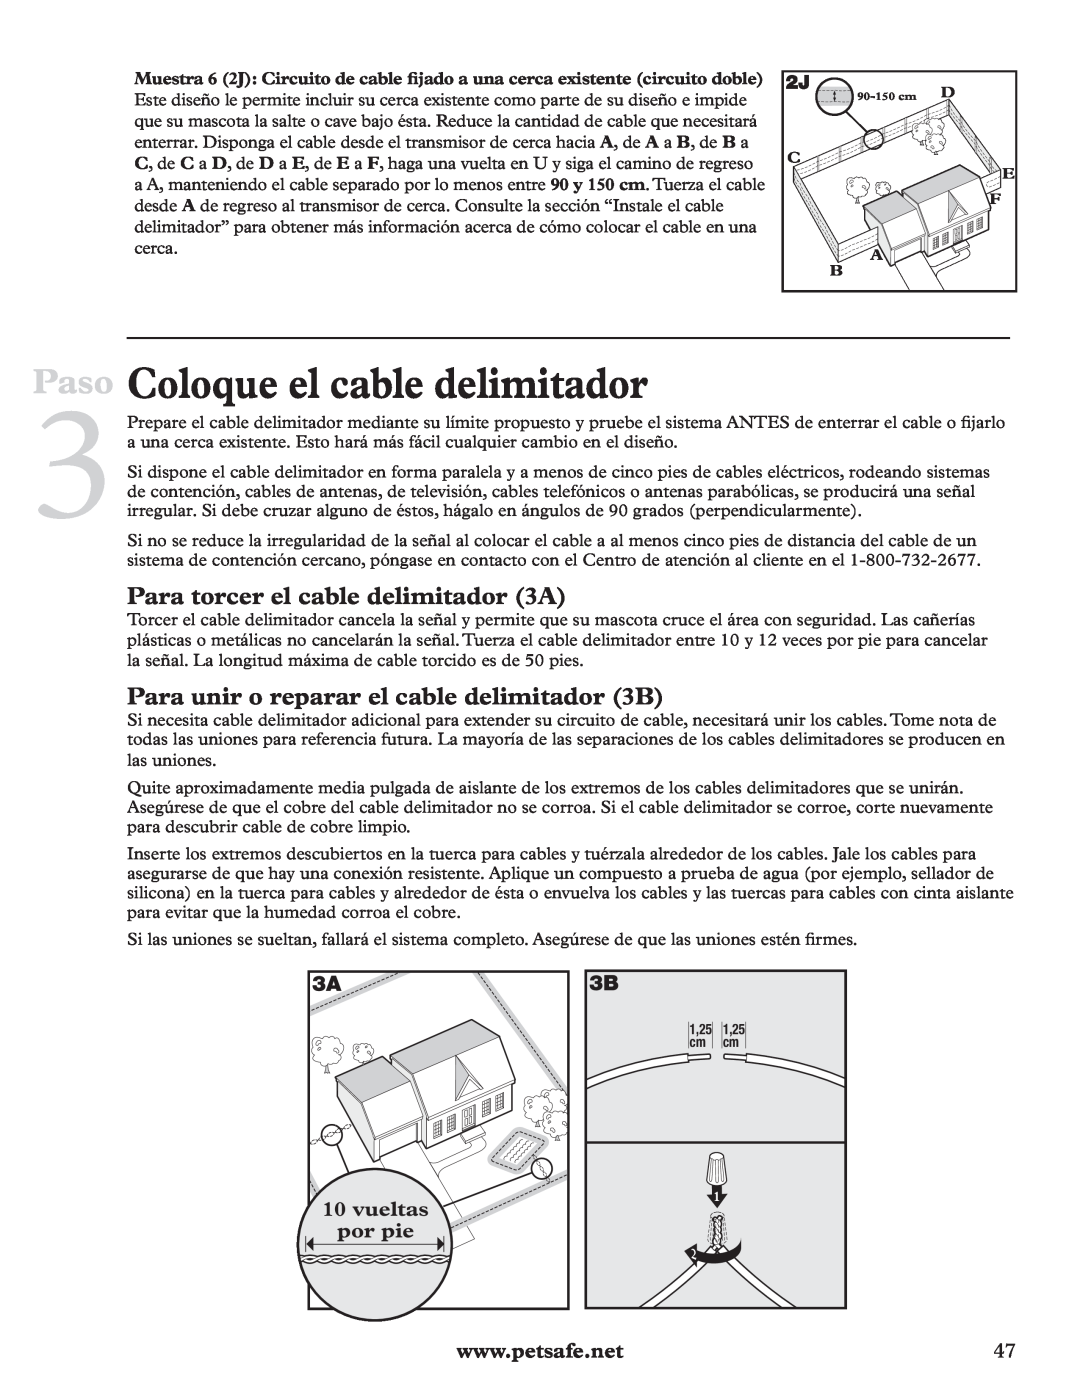 Petsafe RFA-200 manual Coloque el cable delimitador, Para torcer el cable delimitador 3A, vueltas, por pie, Paso 